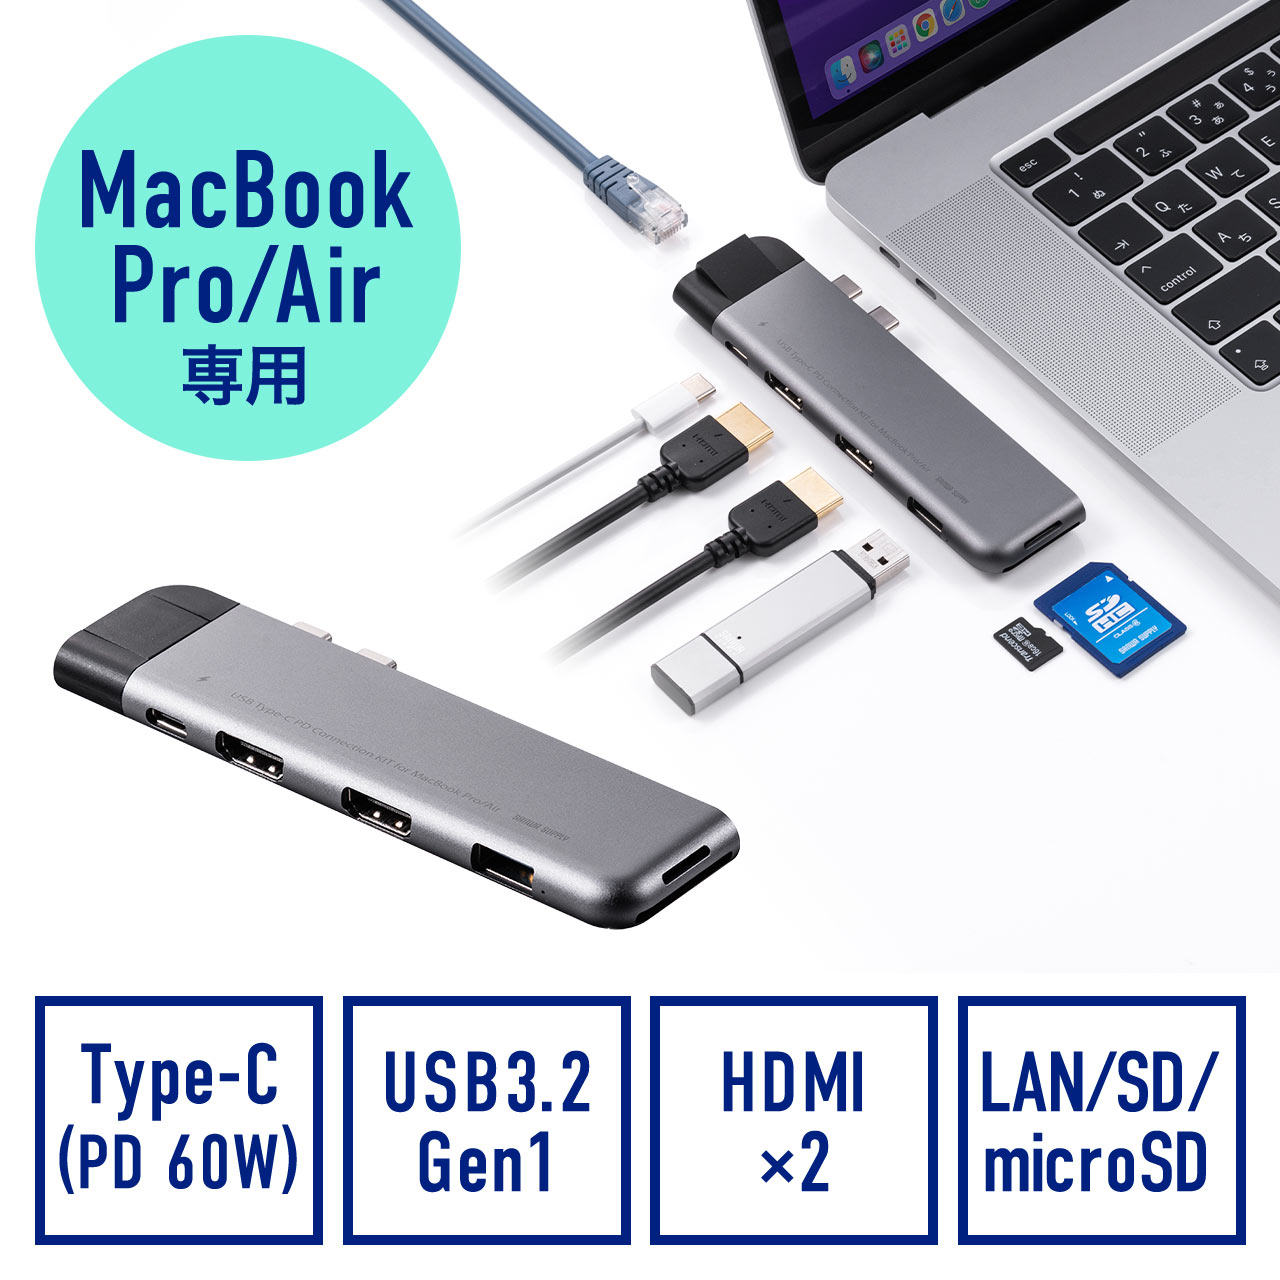 MacBook Pro アダプター ハブ マルチポート マックブック